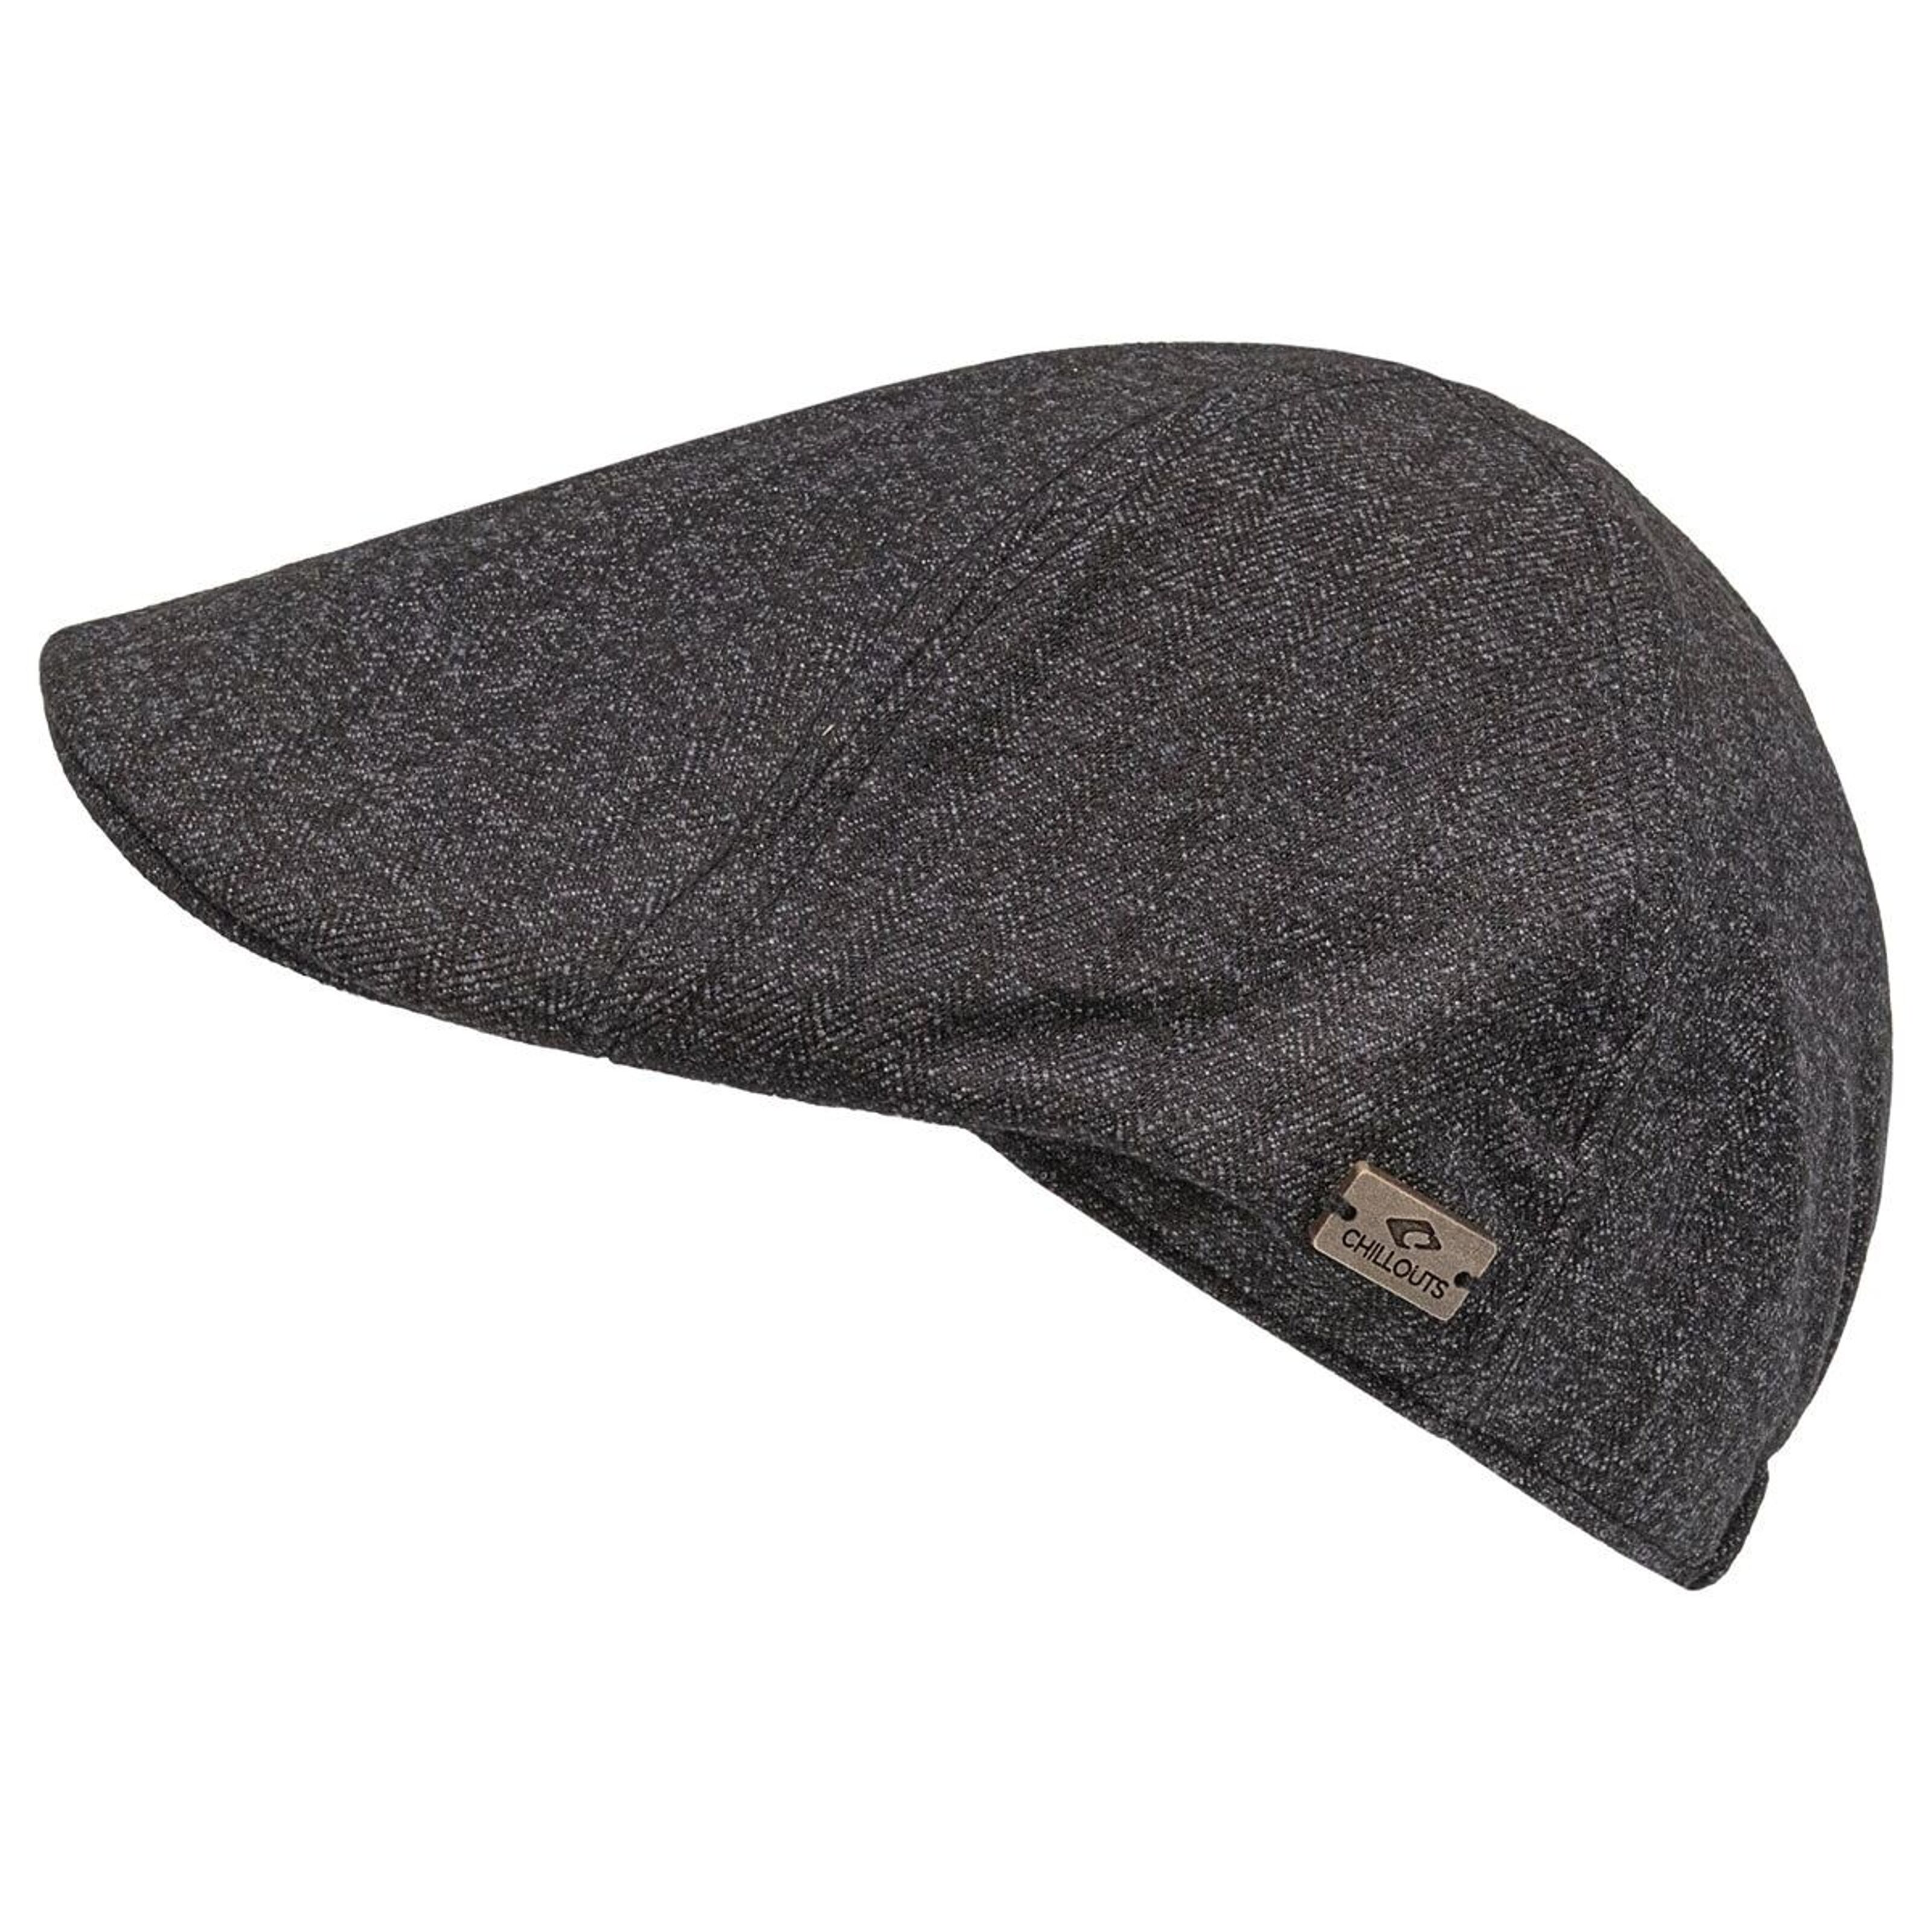 Elliot Cap Buy Hat Flat wholesale